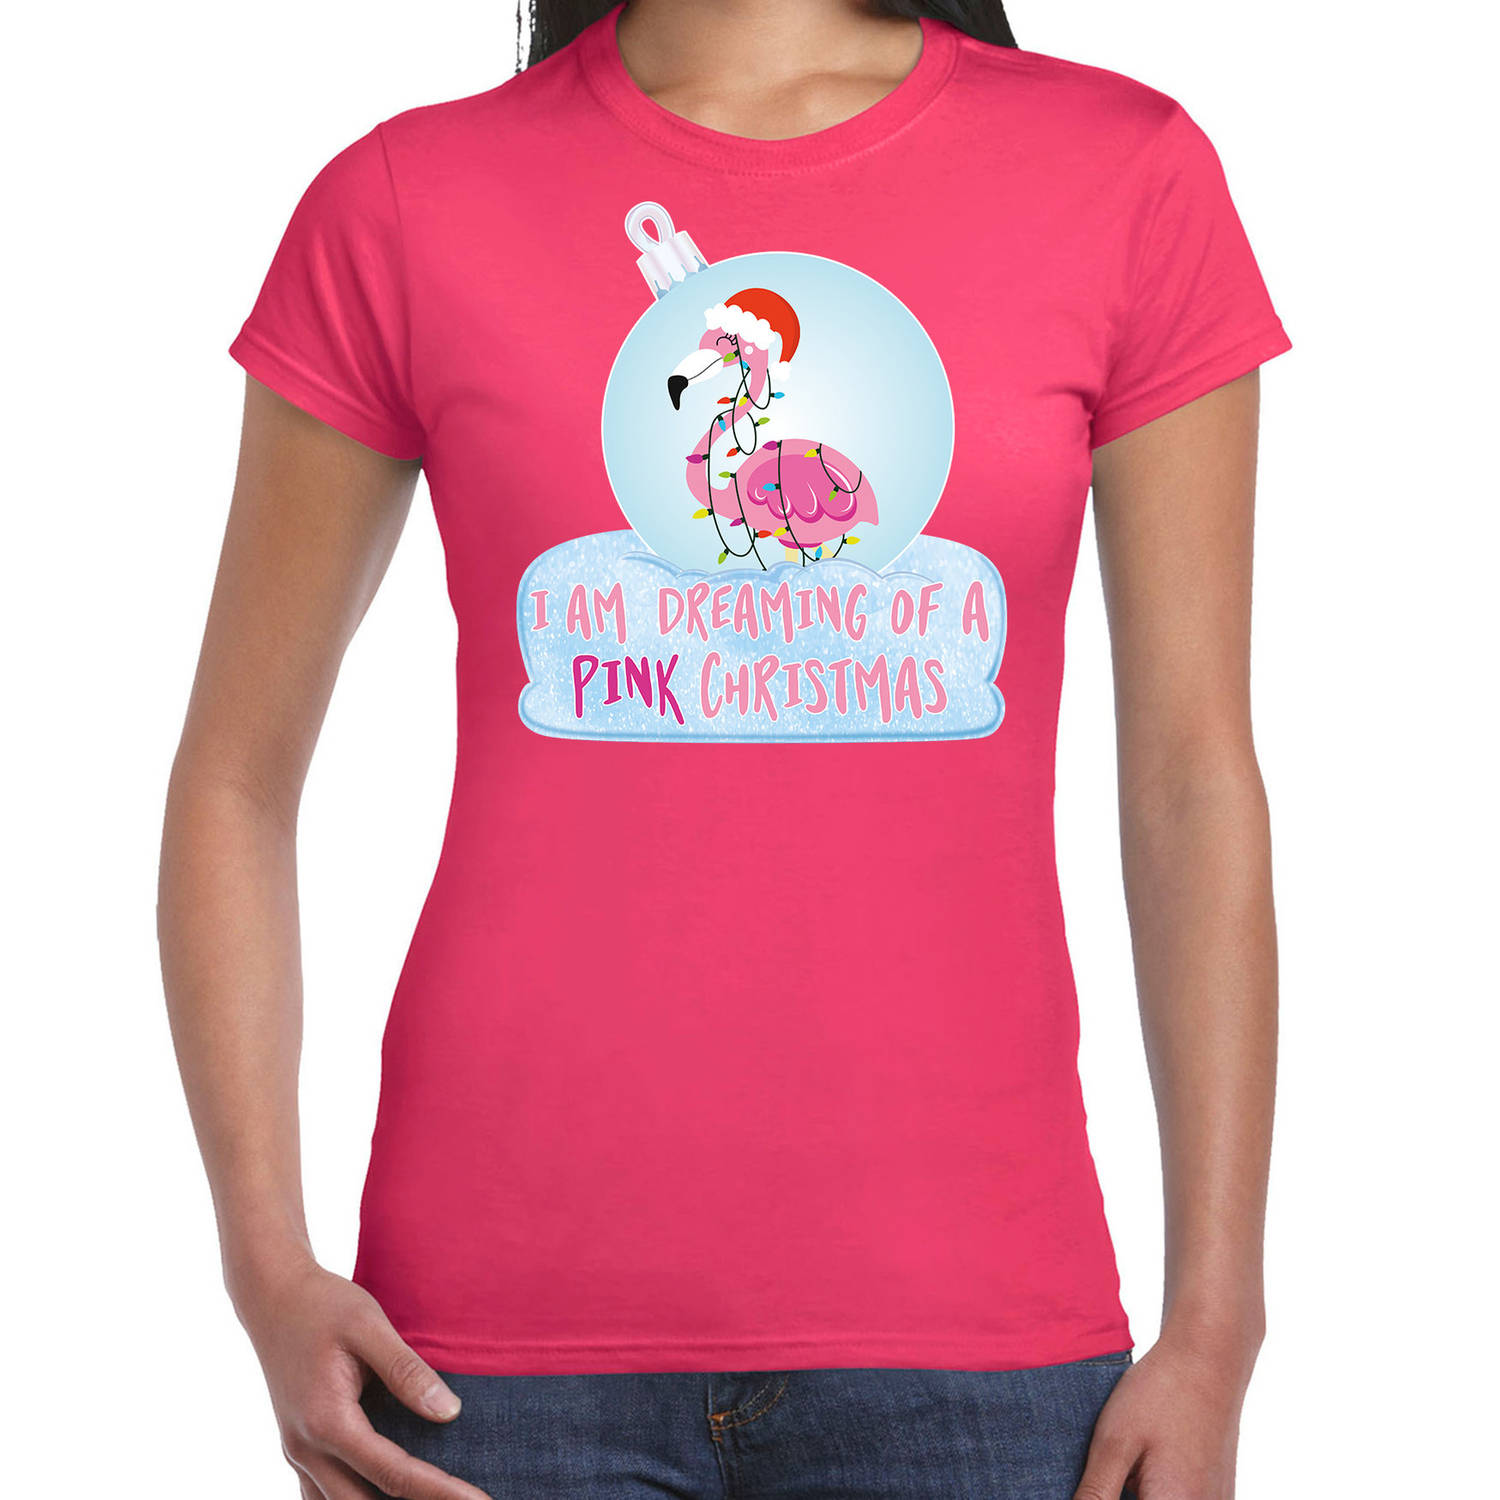 Roze Kerstshirt / Kerstkleding I am dreaming of a pink Christmas voor dames met flamingo kerstbal XS - kerst t-shirts